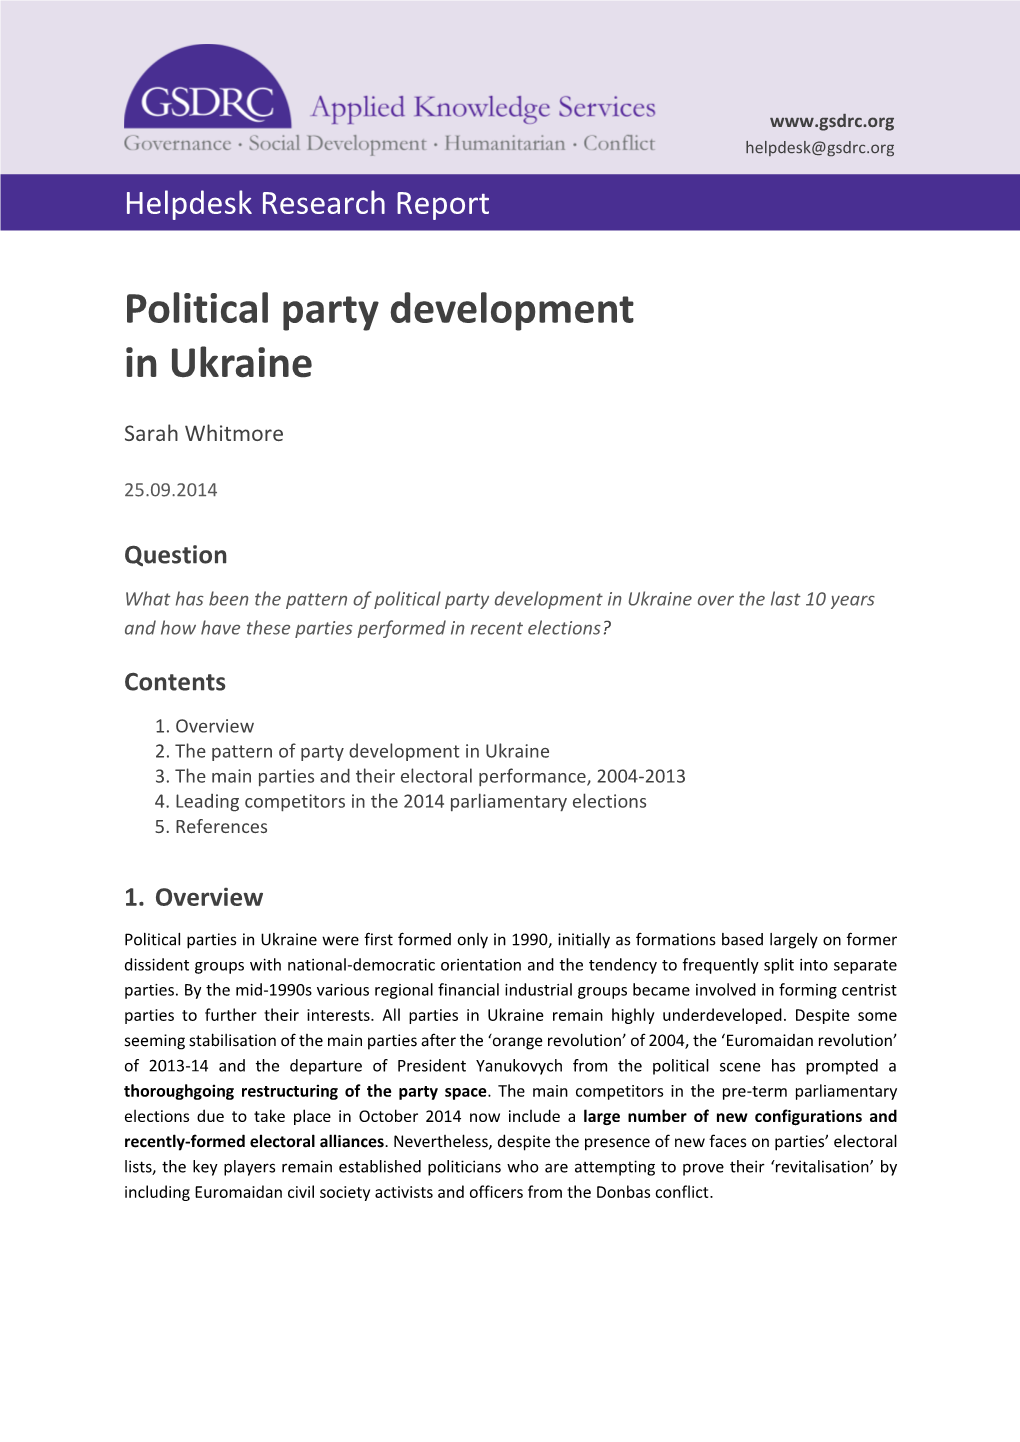 Political Party Development in Ukraine